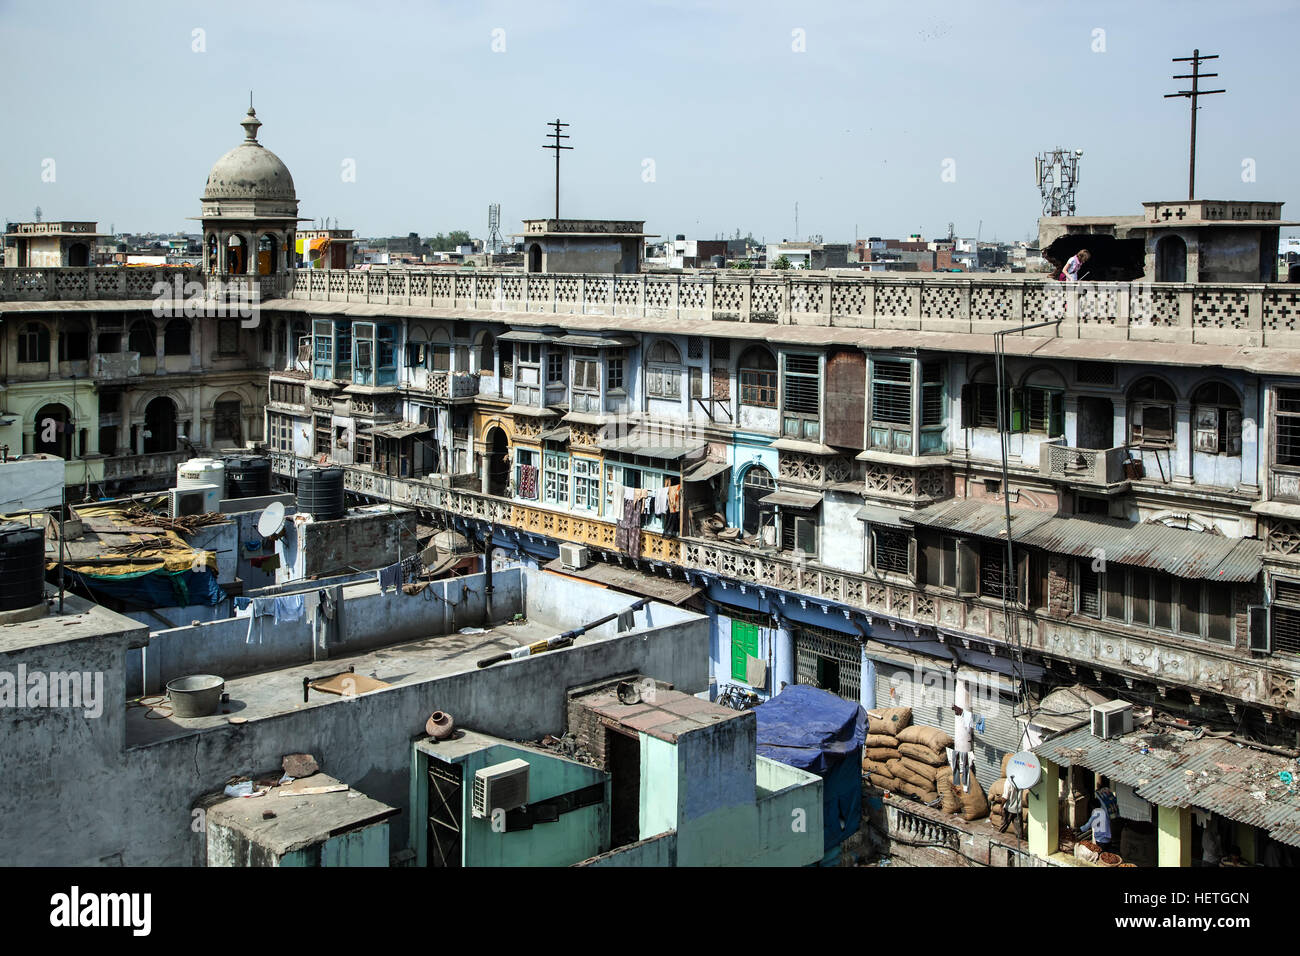 Baufällige Gebäude, Spice Market, Old Delhi, India Stockfoto